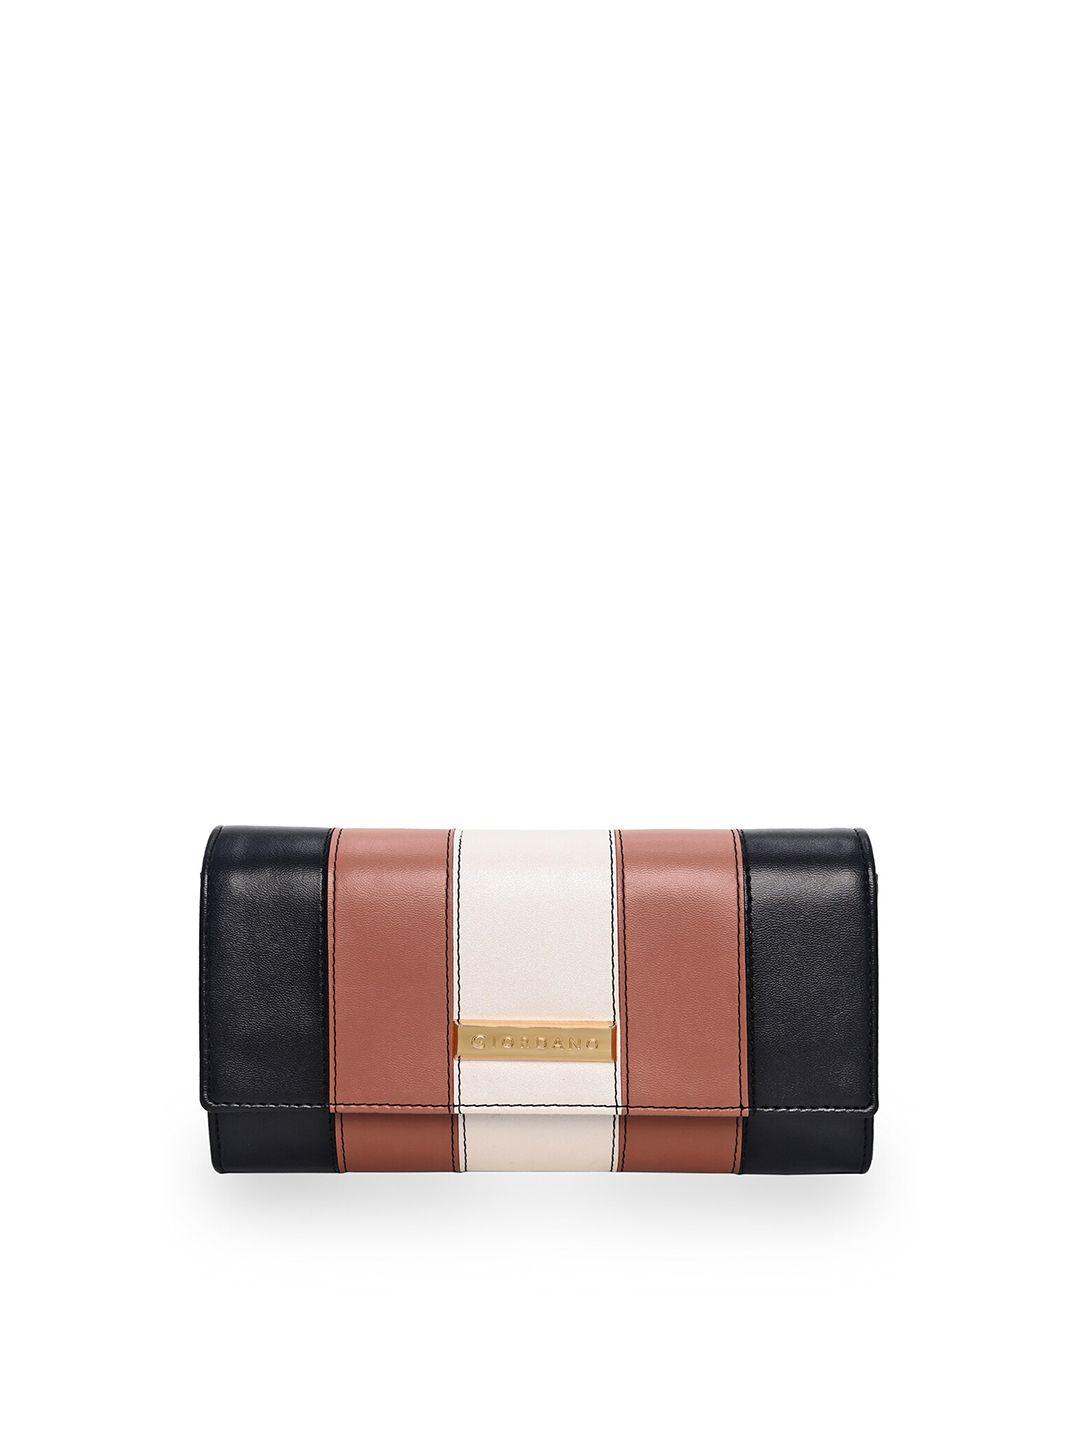 giordano black & brown colourblocked purse clutch